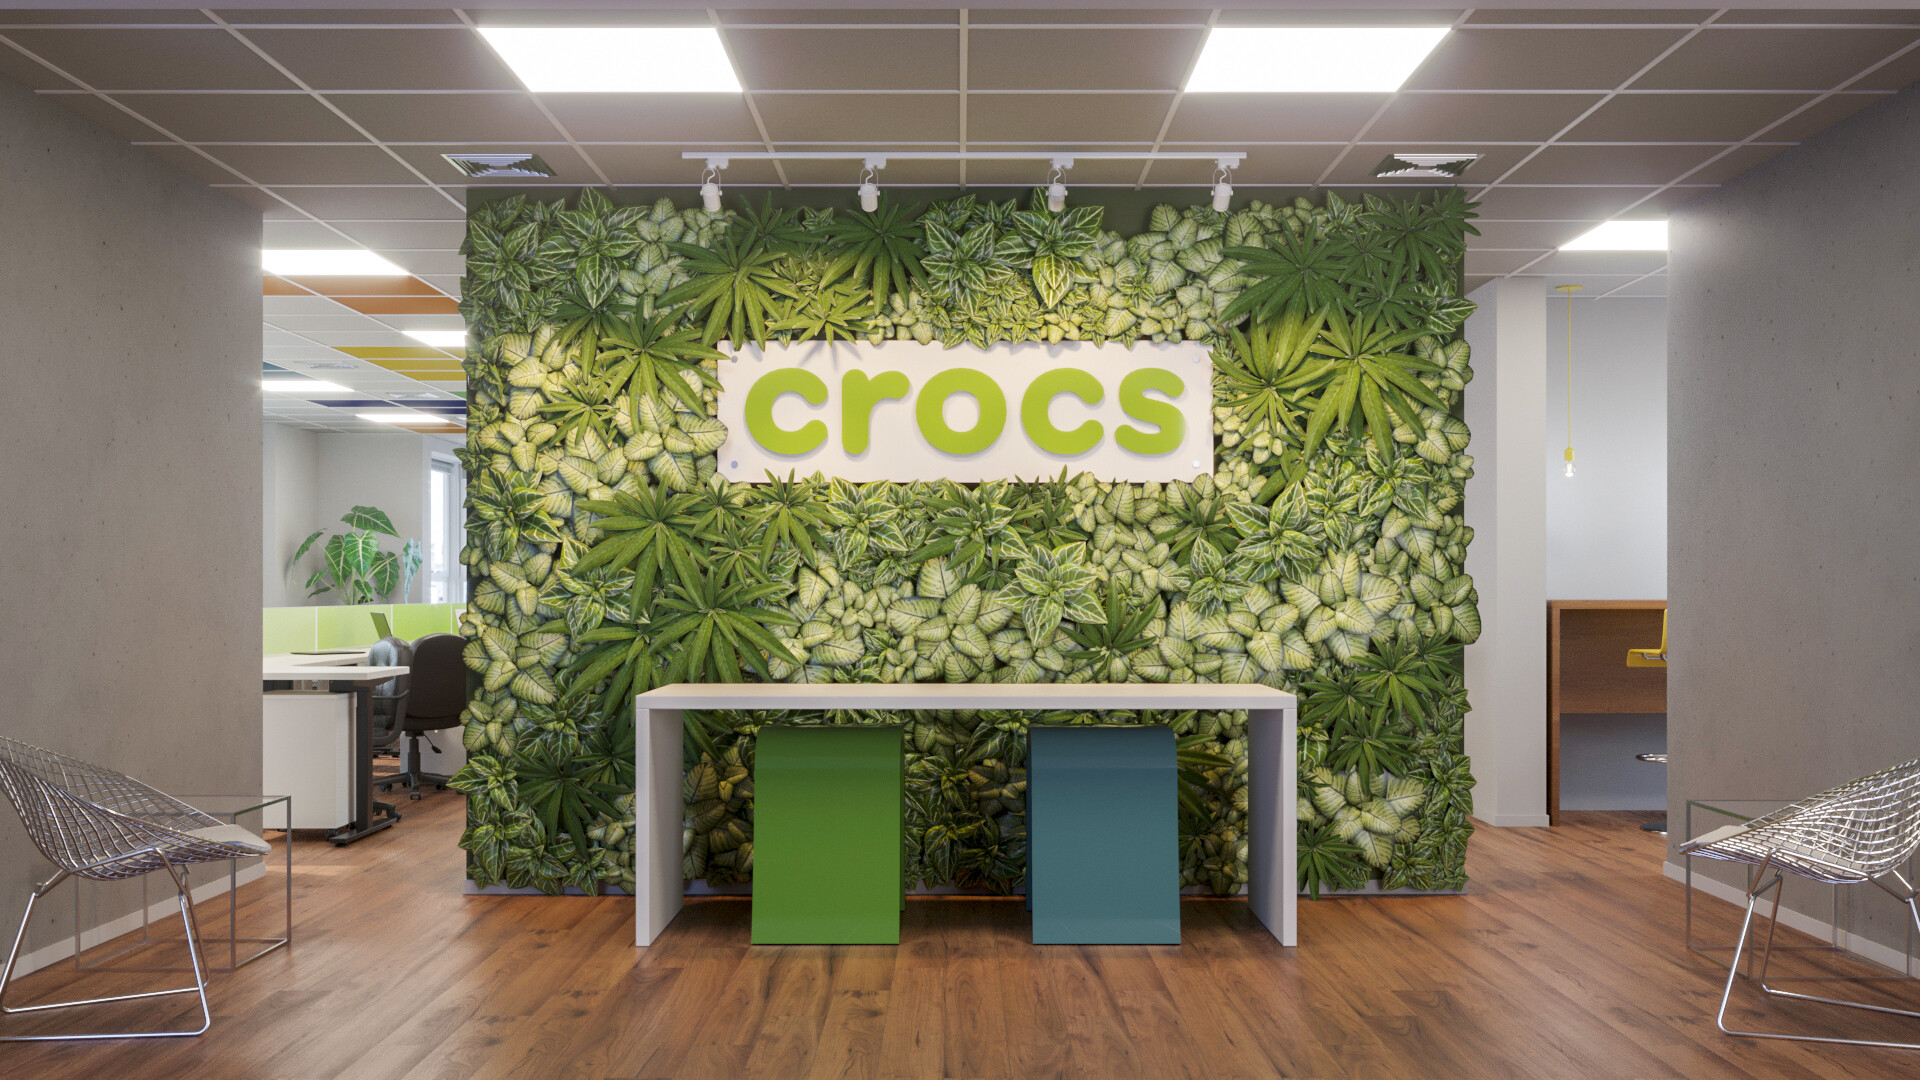 crocs corporate office address